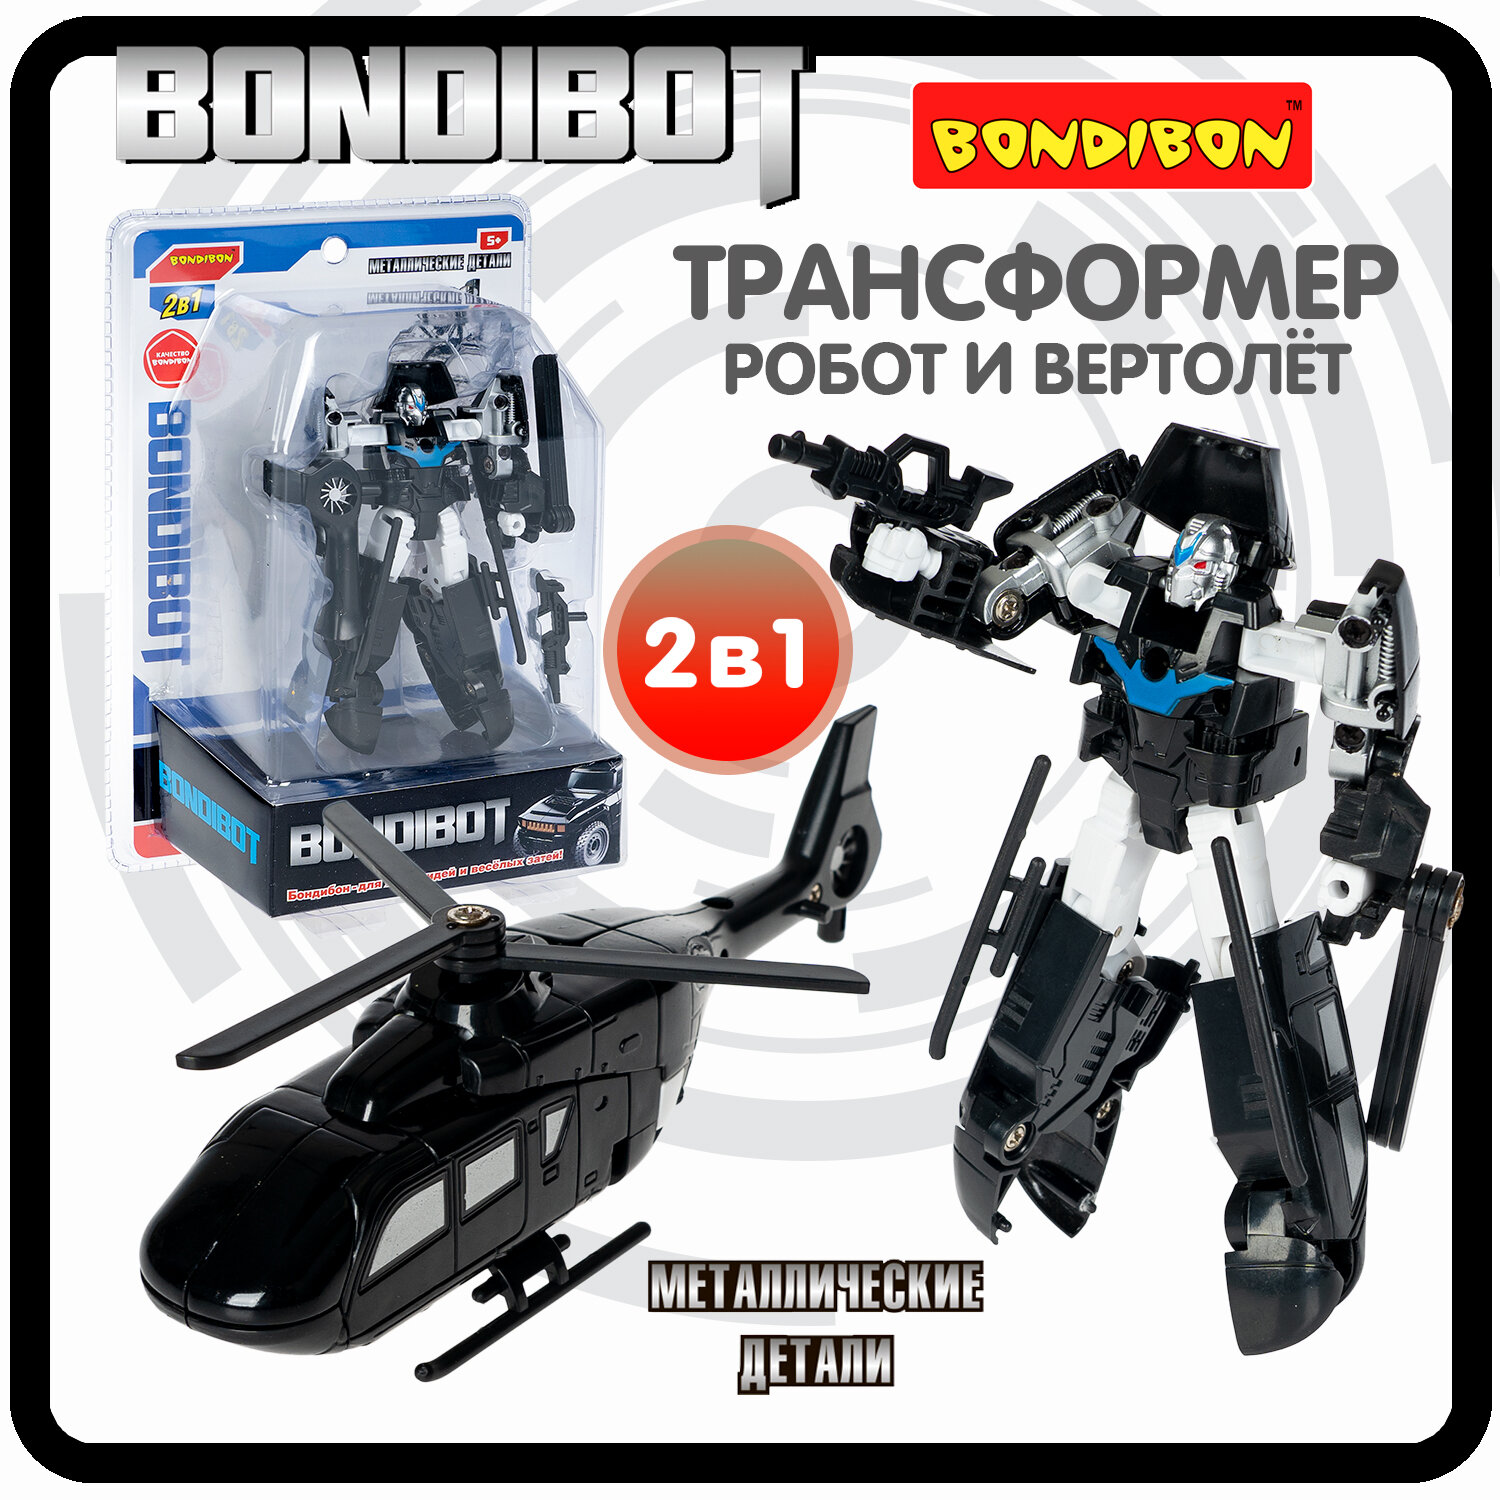 Трансформер робот-вертолёт, метал. детали, 2в1 BONDIBOT Bondibon, цвет чёрный, CRD 13,5х19х6,7см